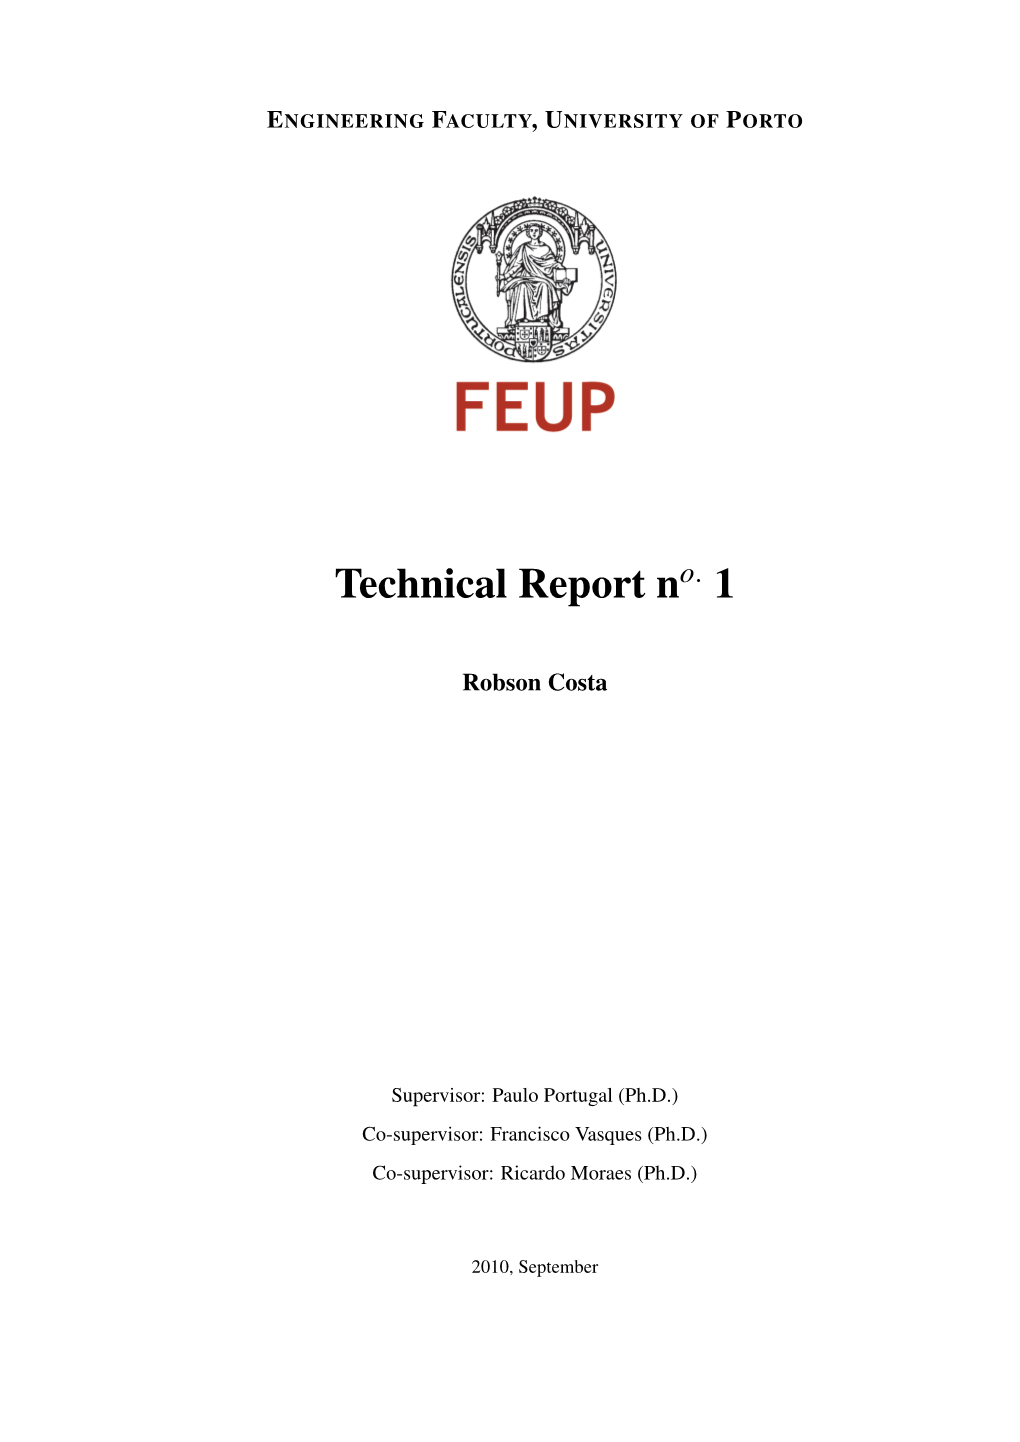 Technical Report No